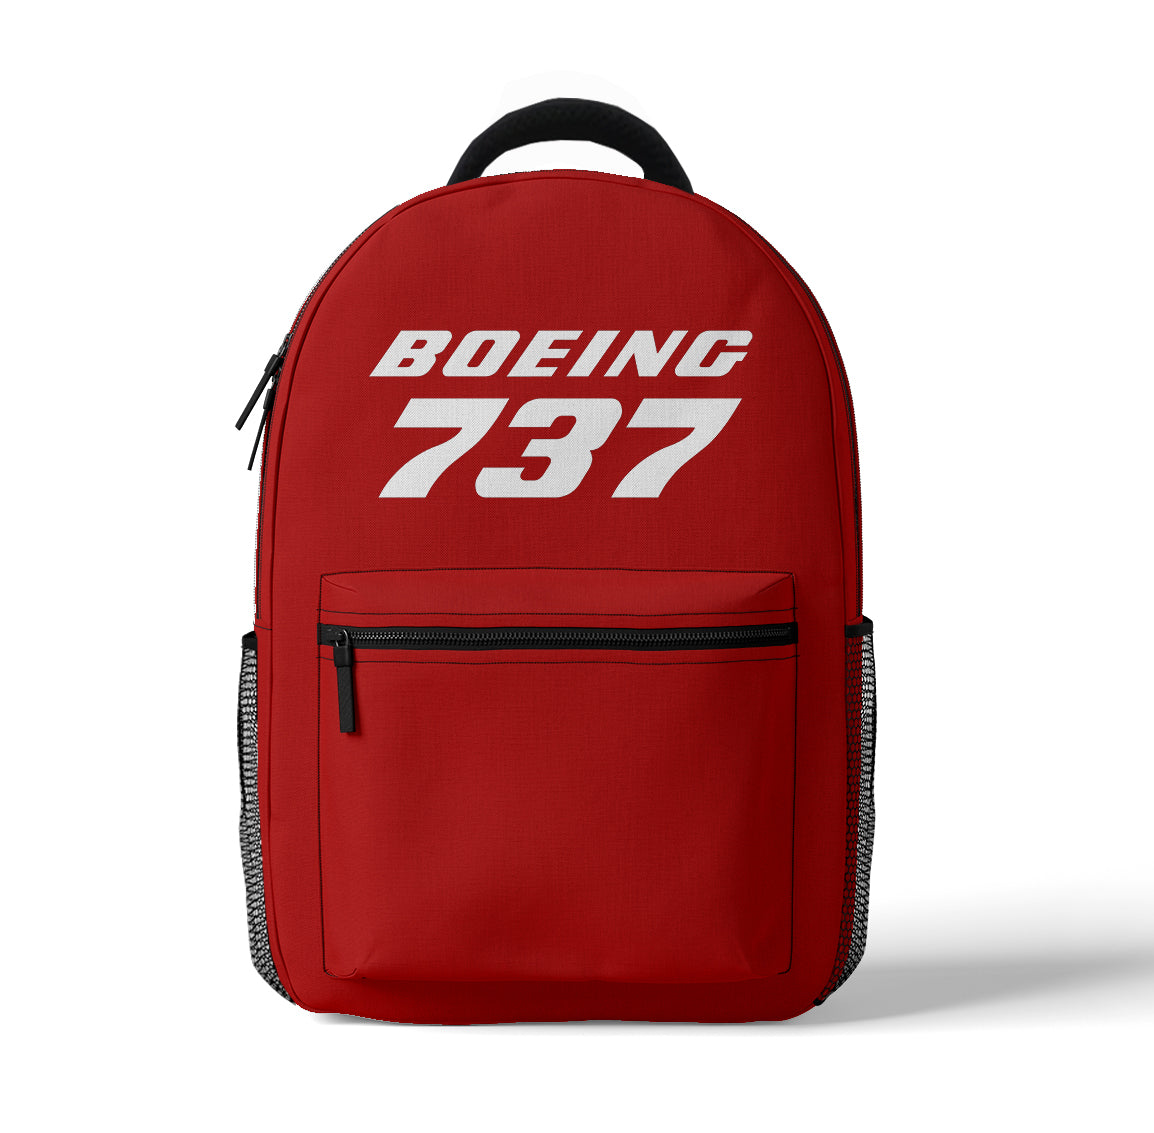 Boeing 737 & Text Designed 3D Backpacks